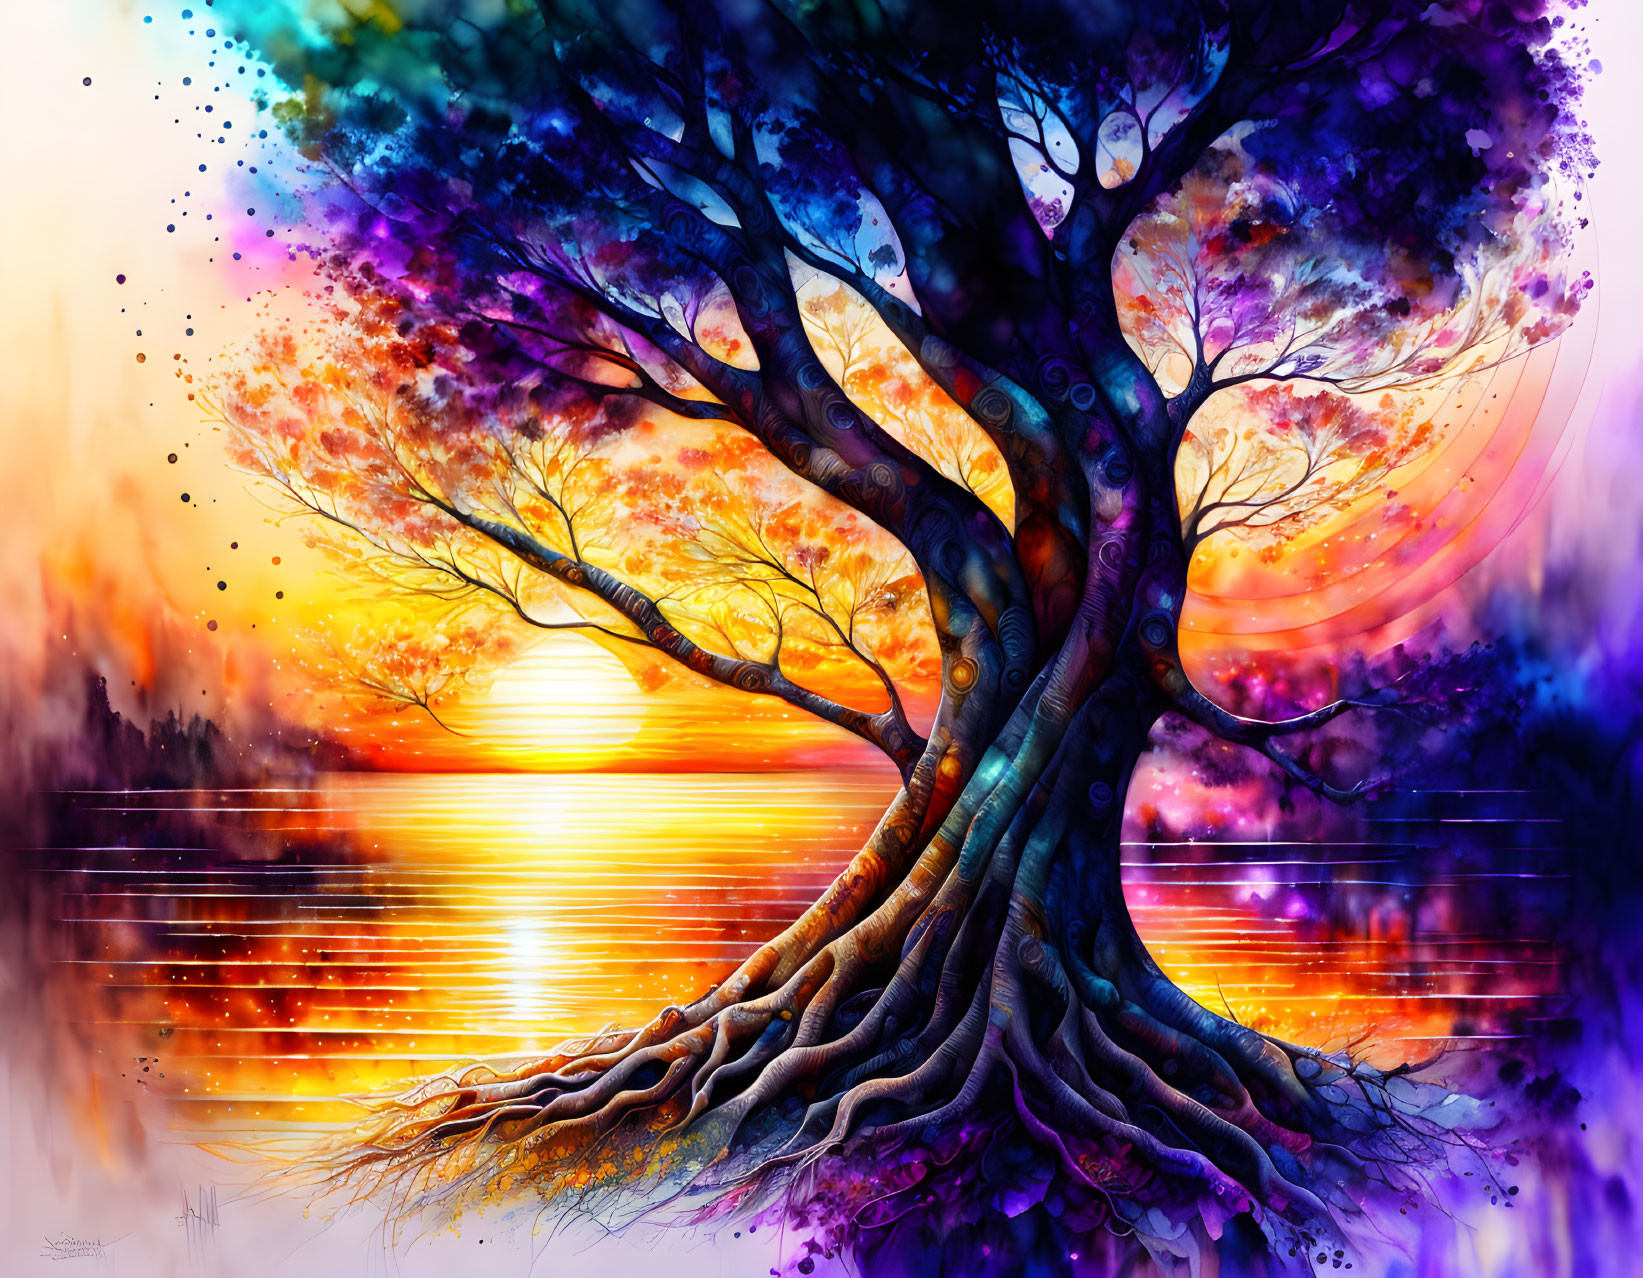 Vivid Fantasy Tree Illustration with Sunset Reflections